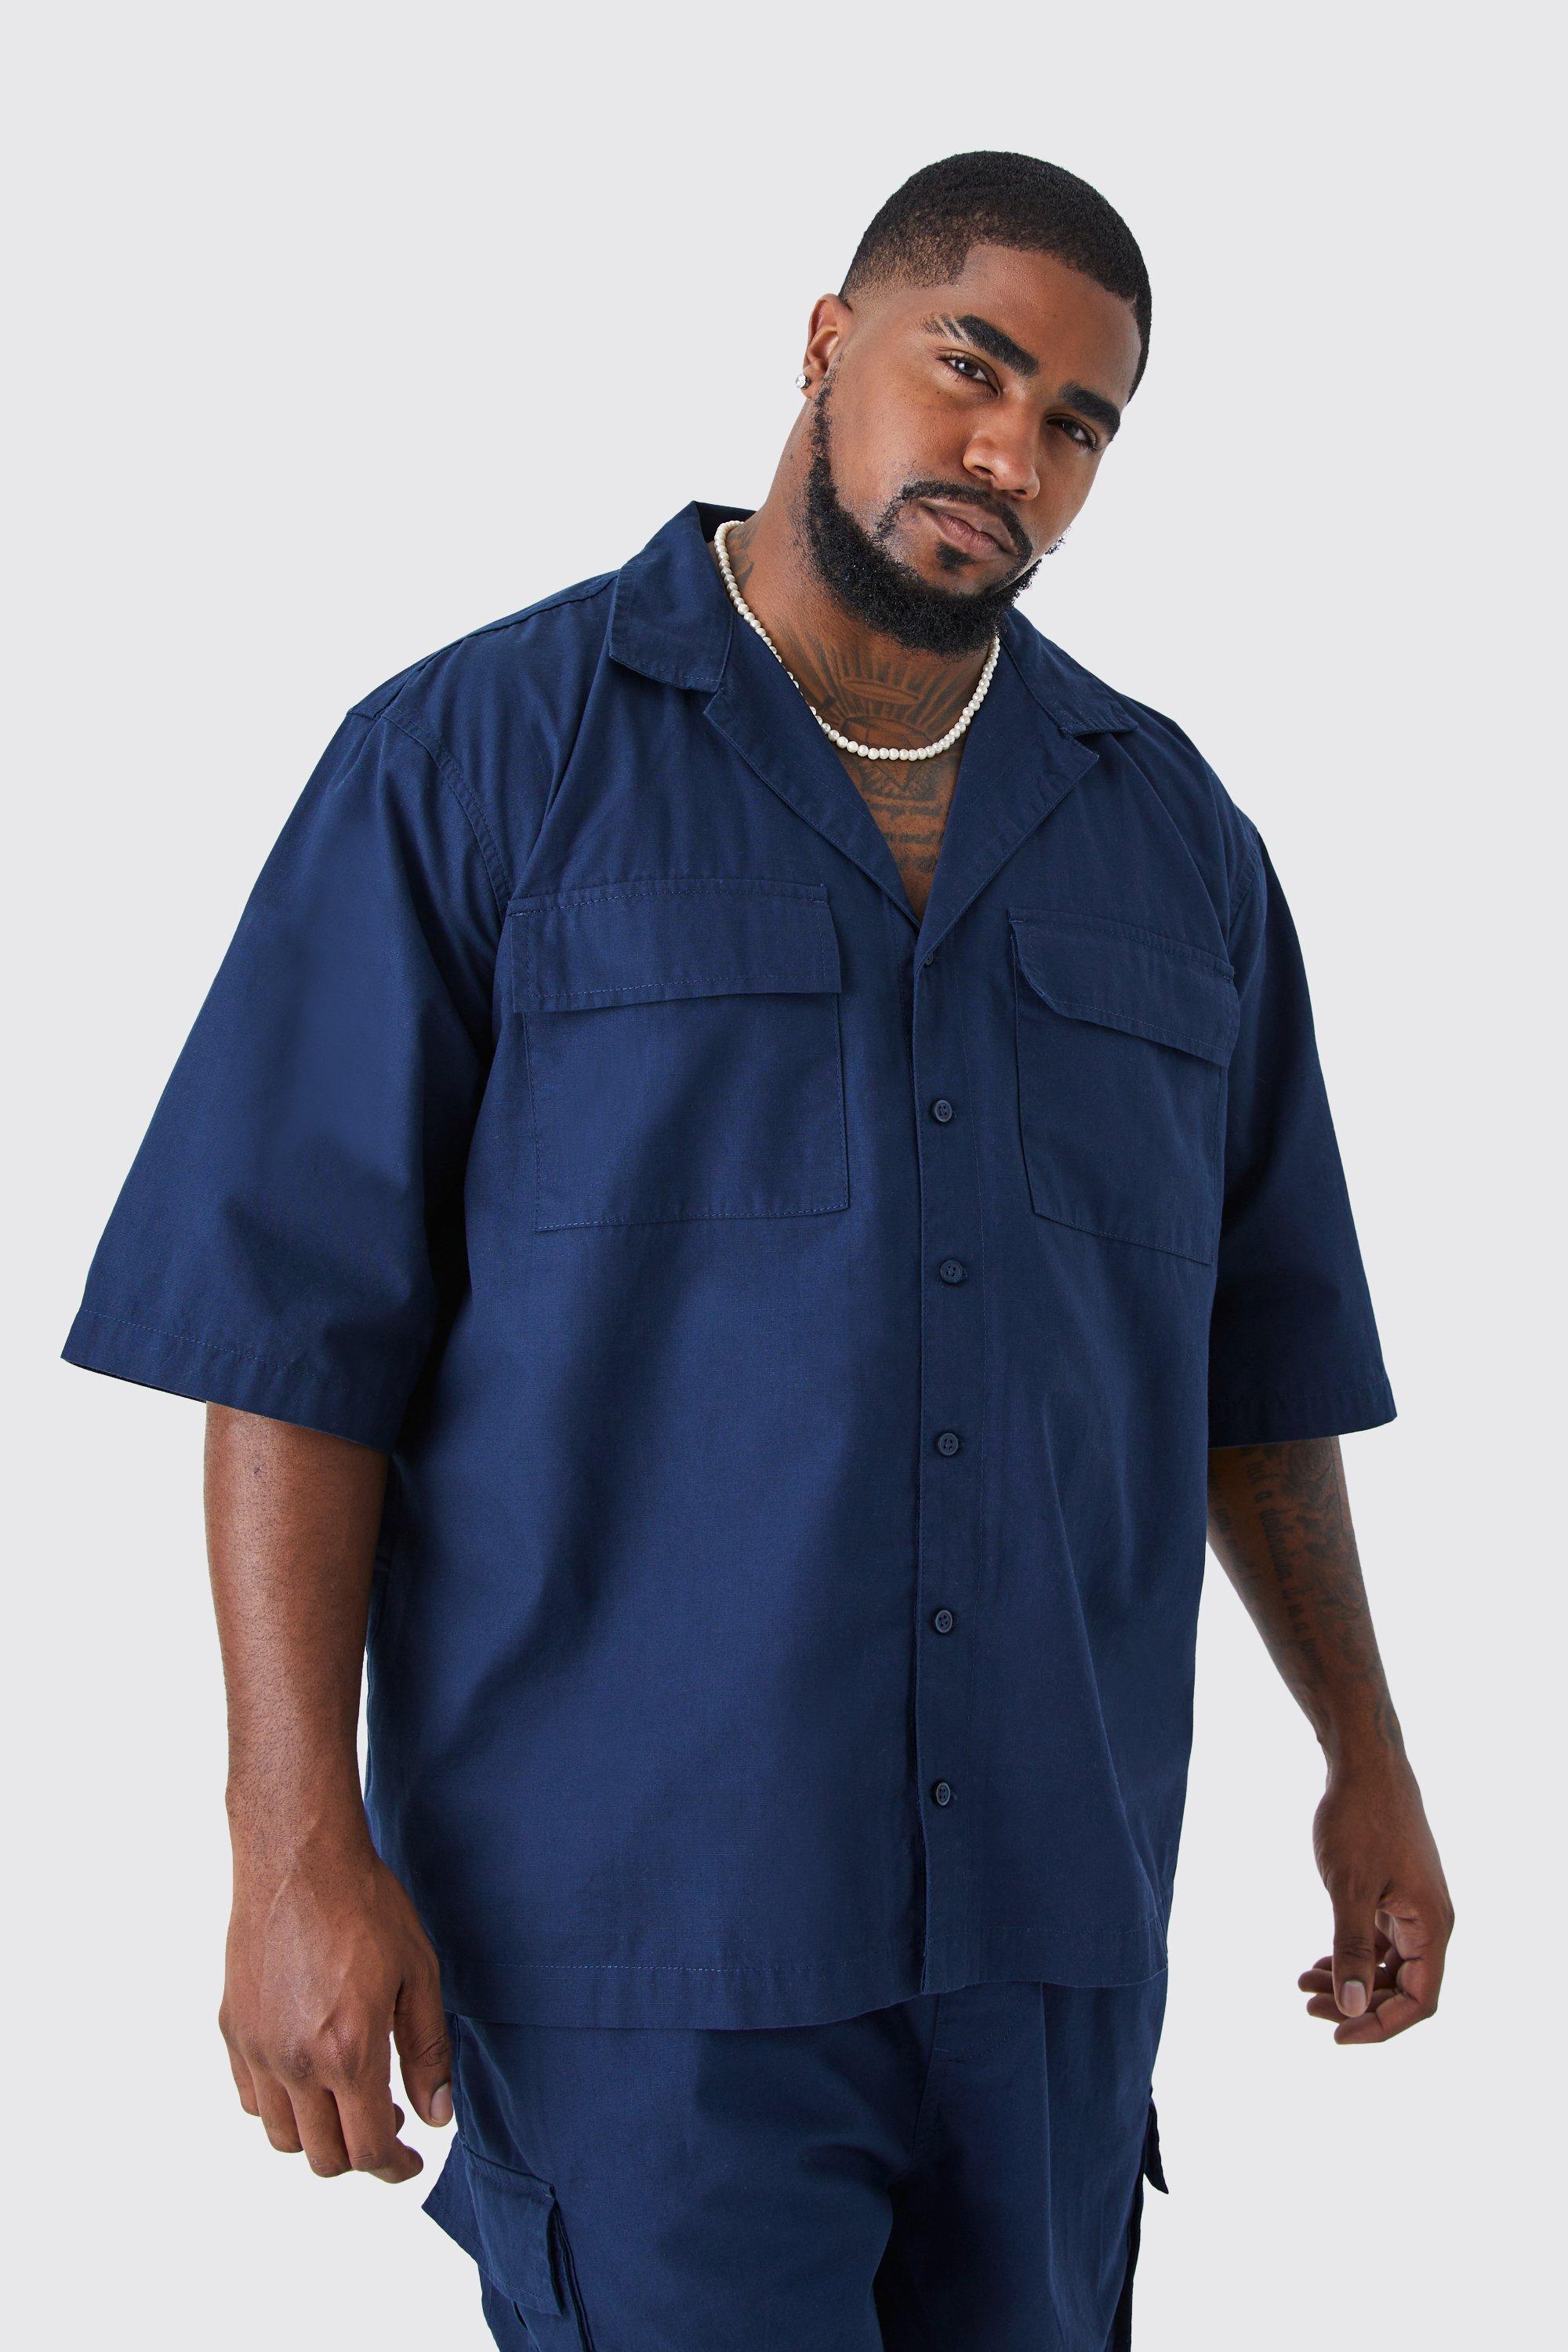 boohooMAN Men's Short Sleeve Denim Shirt